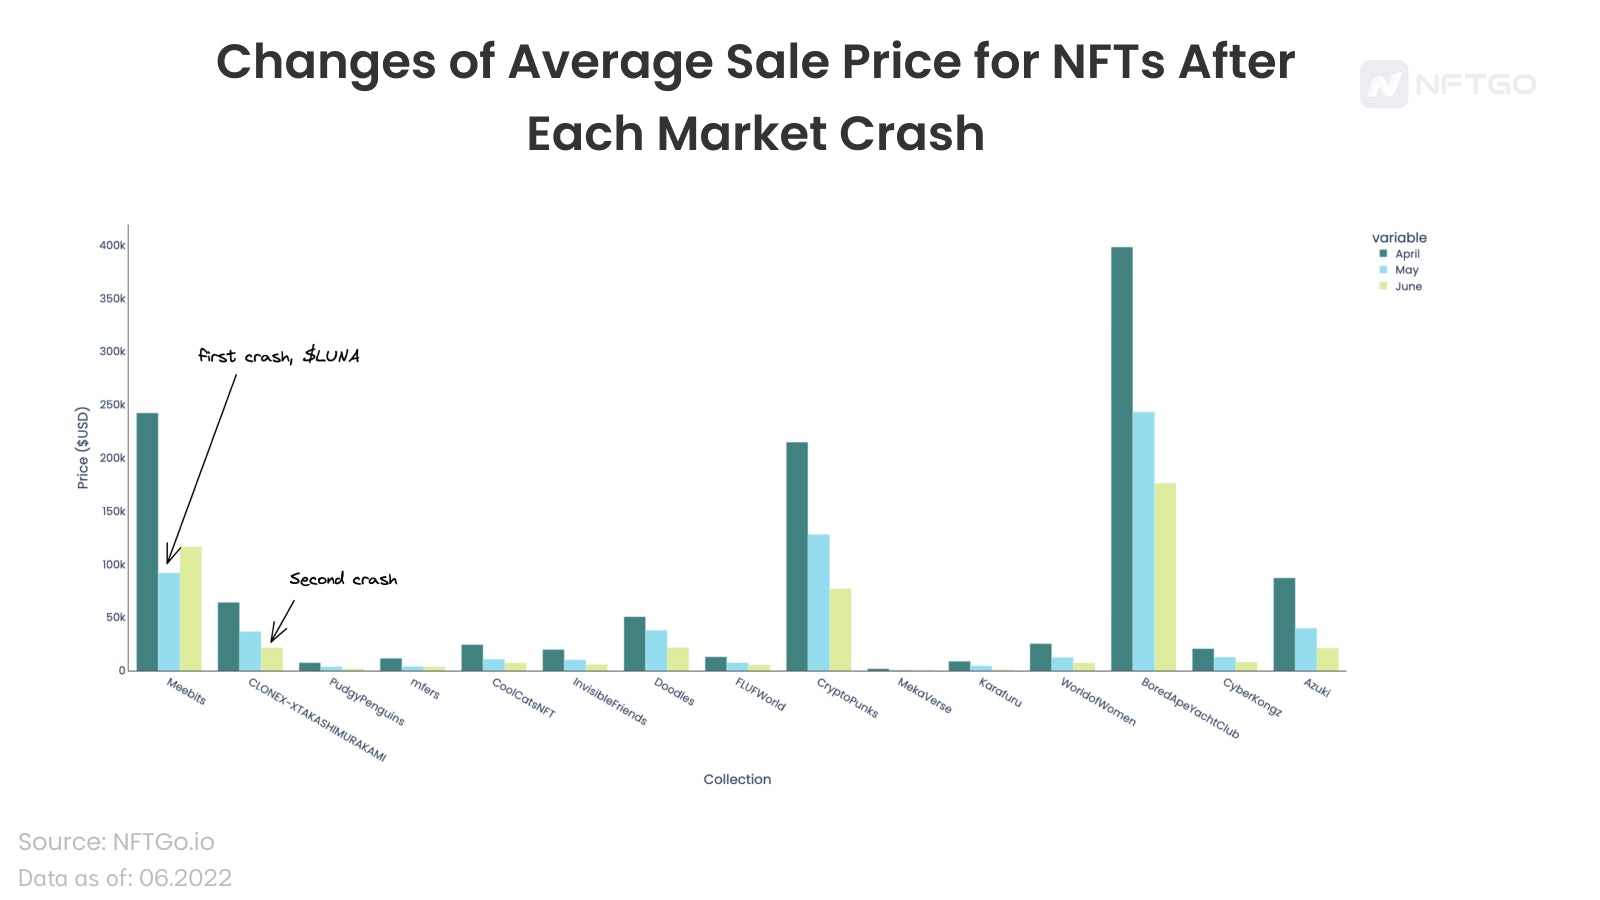 Changes in Average Sale Price for NFTs After Each Market Crash